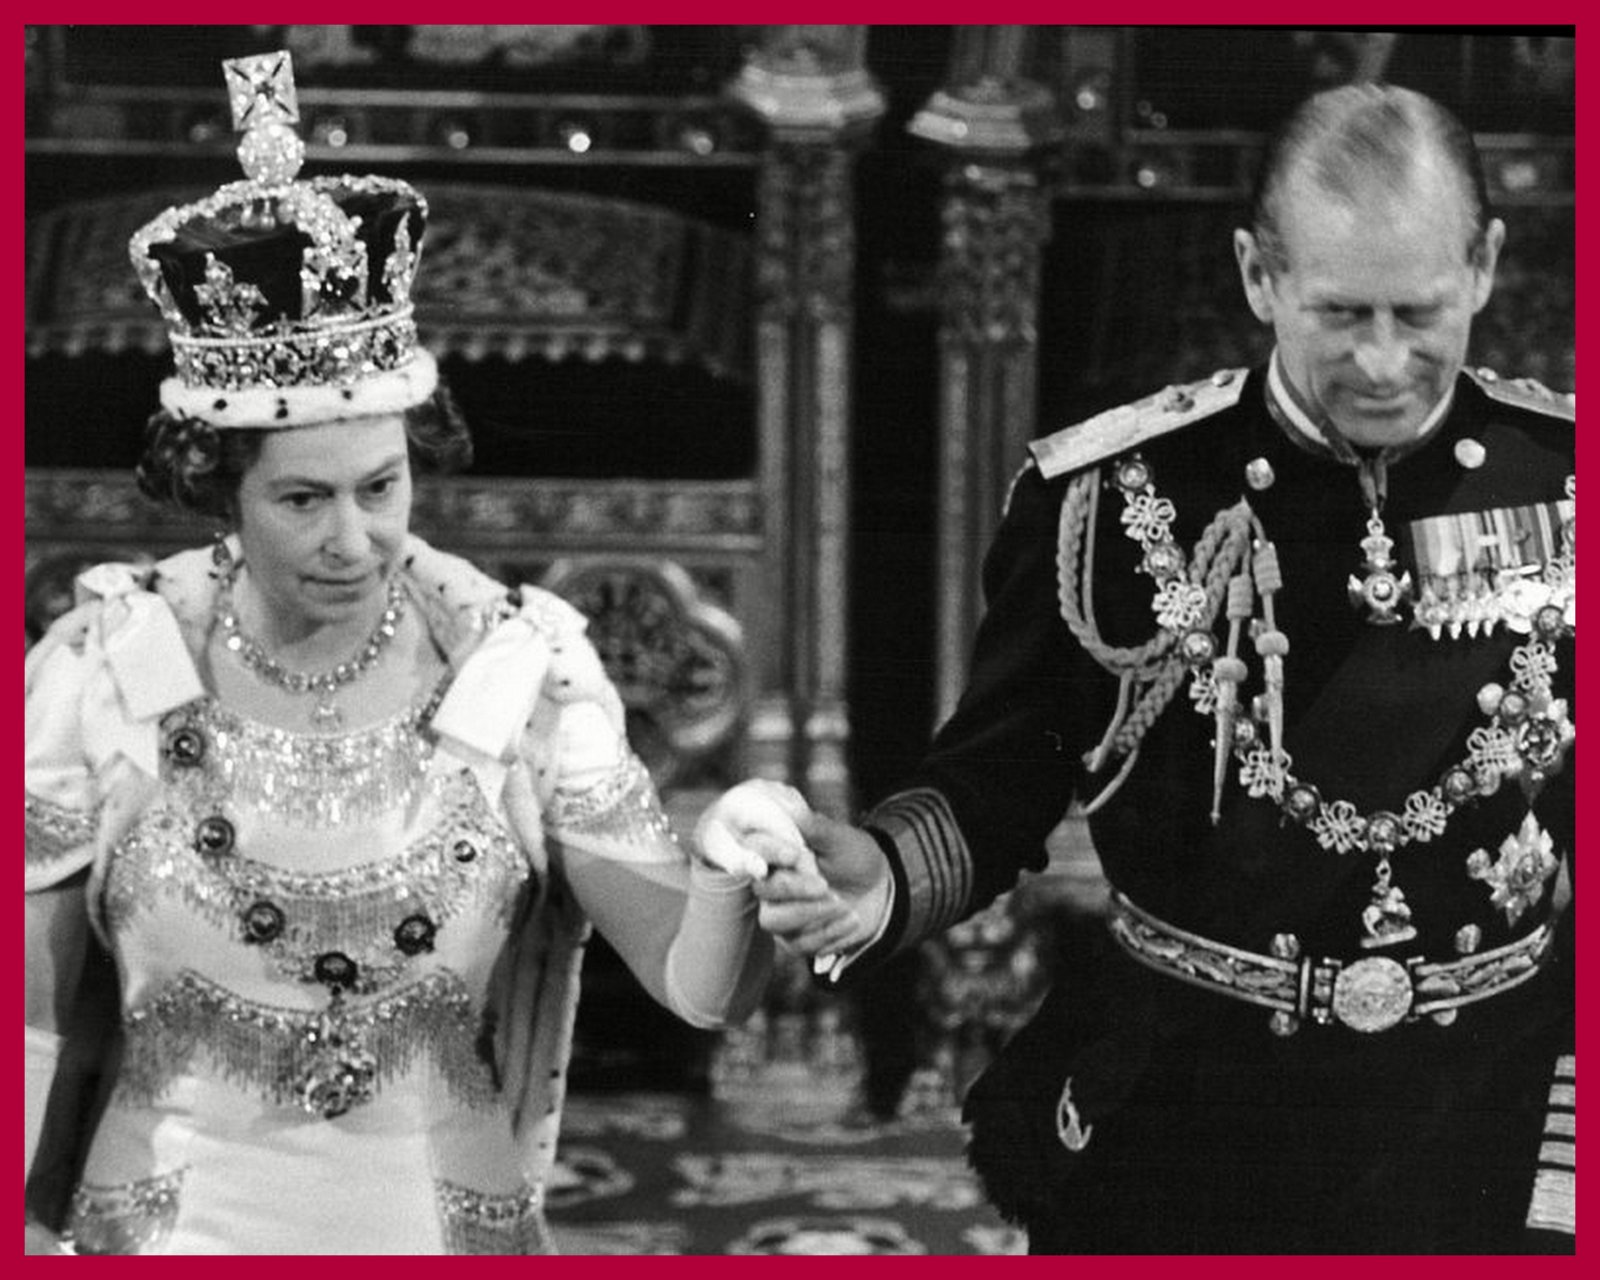 Муж елизаветы в молодости. Elizabeth 2 and Prince Philip.